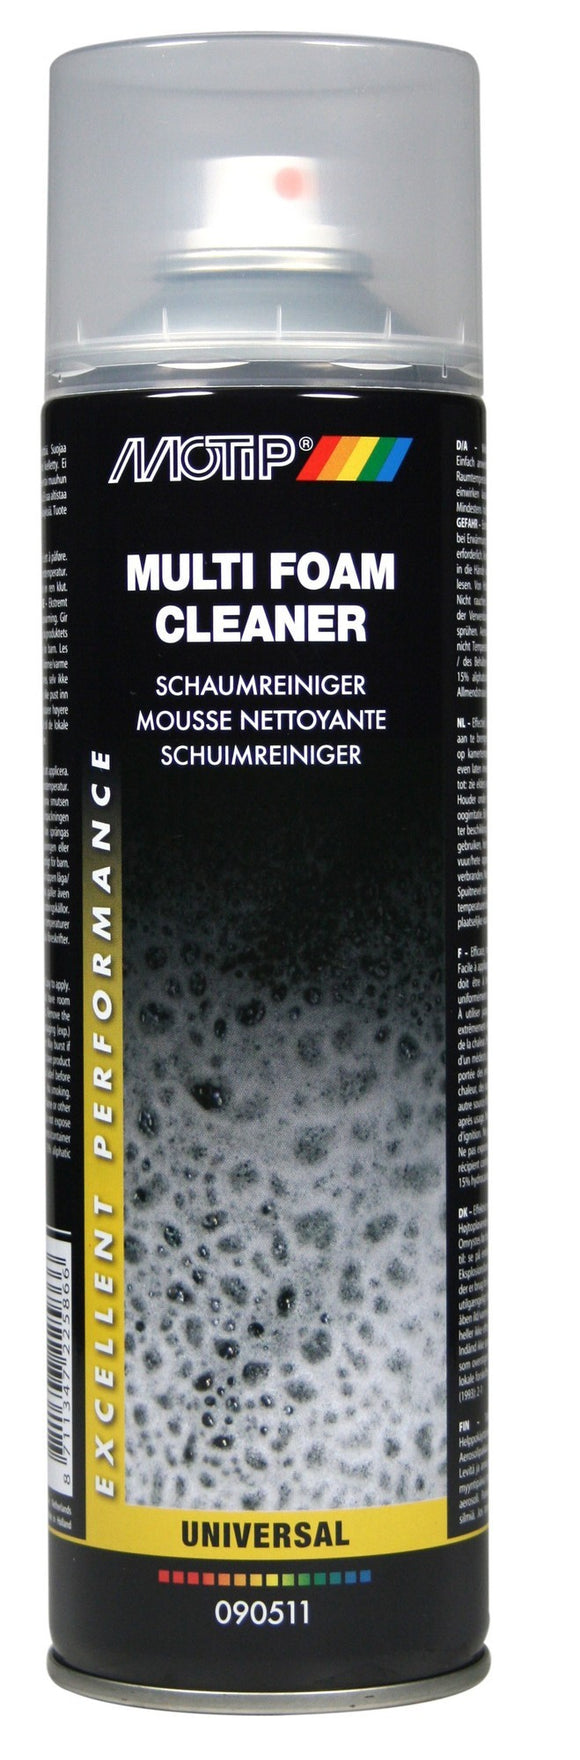 Motip Foam Cleaner 000588